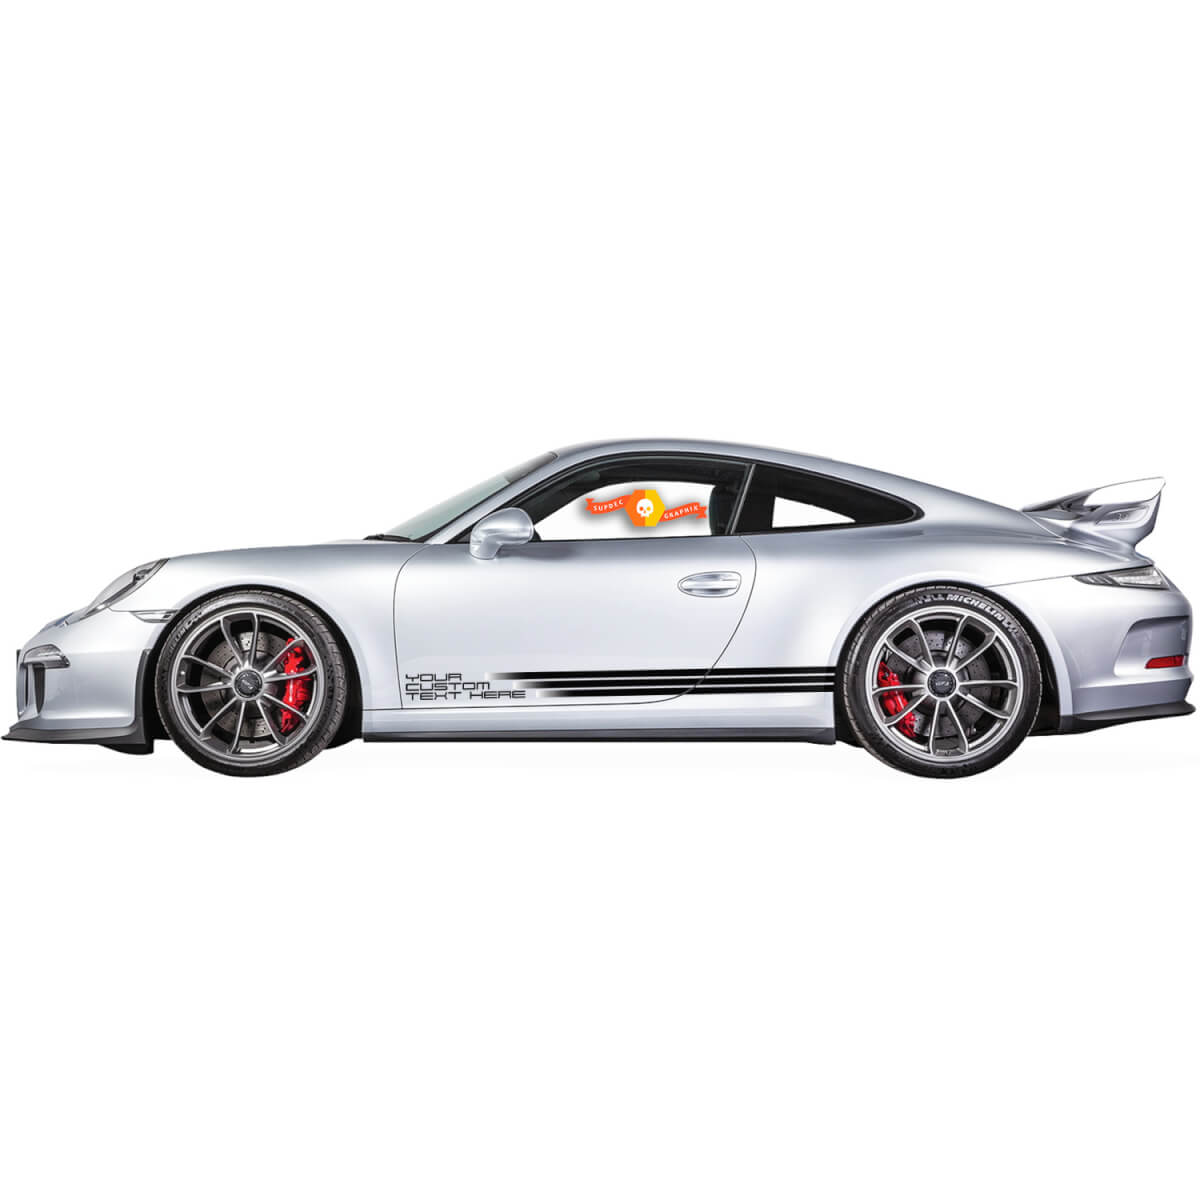 Paar Porsche Aufkleber verblasste Porsche Performance Custom Texttüren Seitenaufkleber Aufkleber